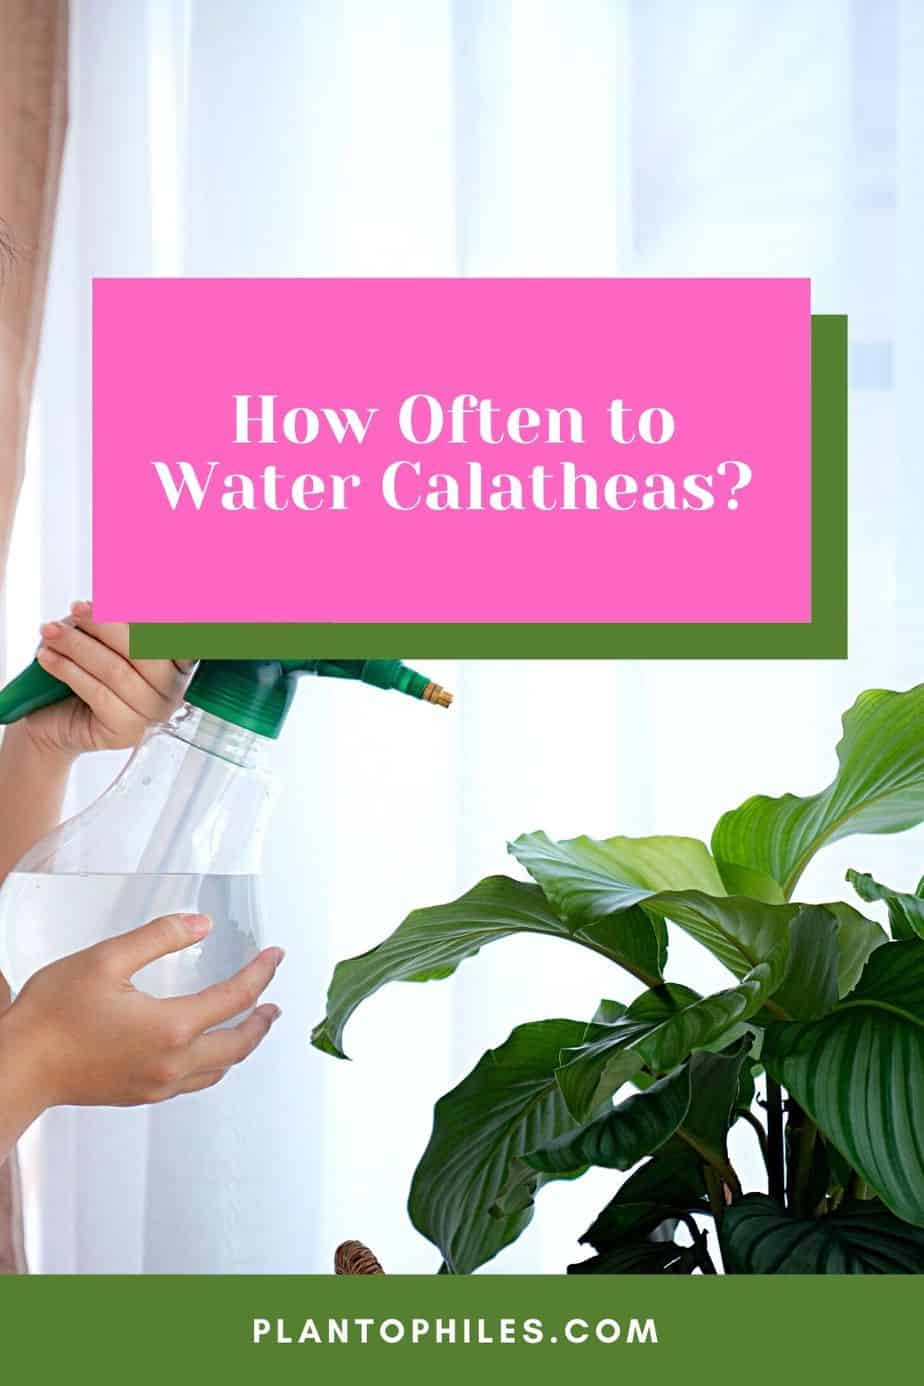 How Often to Water Calatheas?